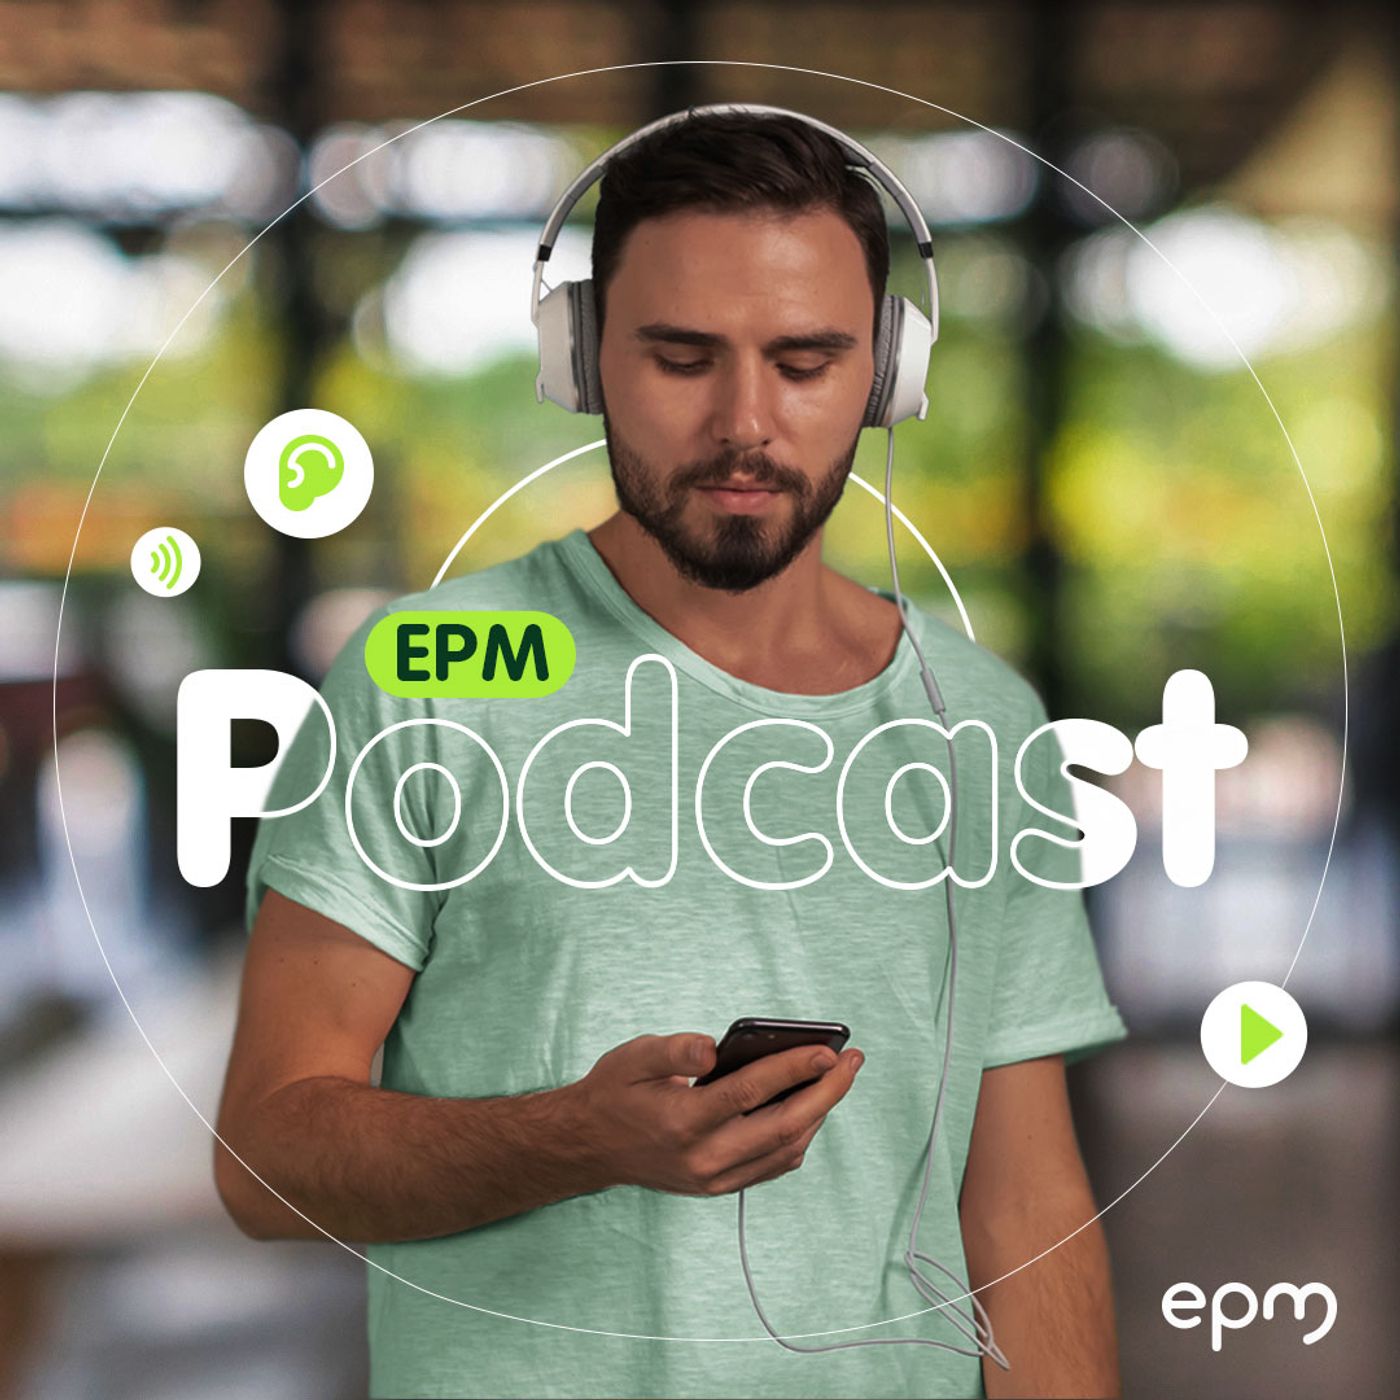 EPM Podcast